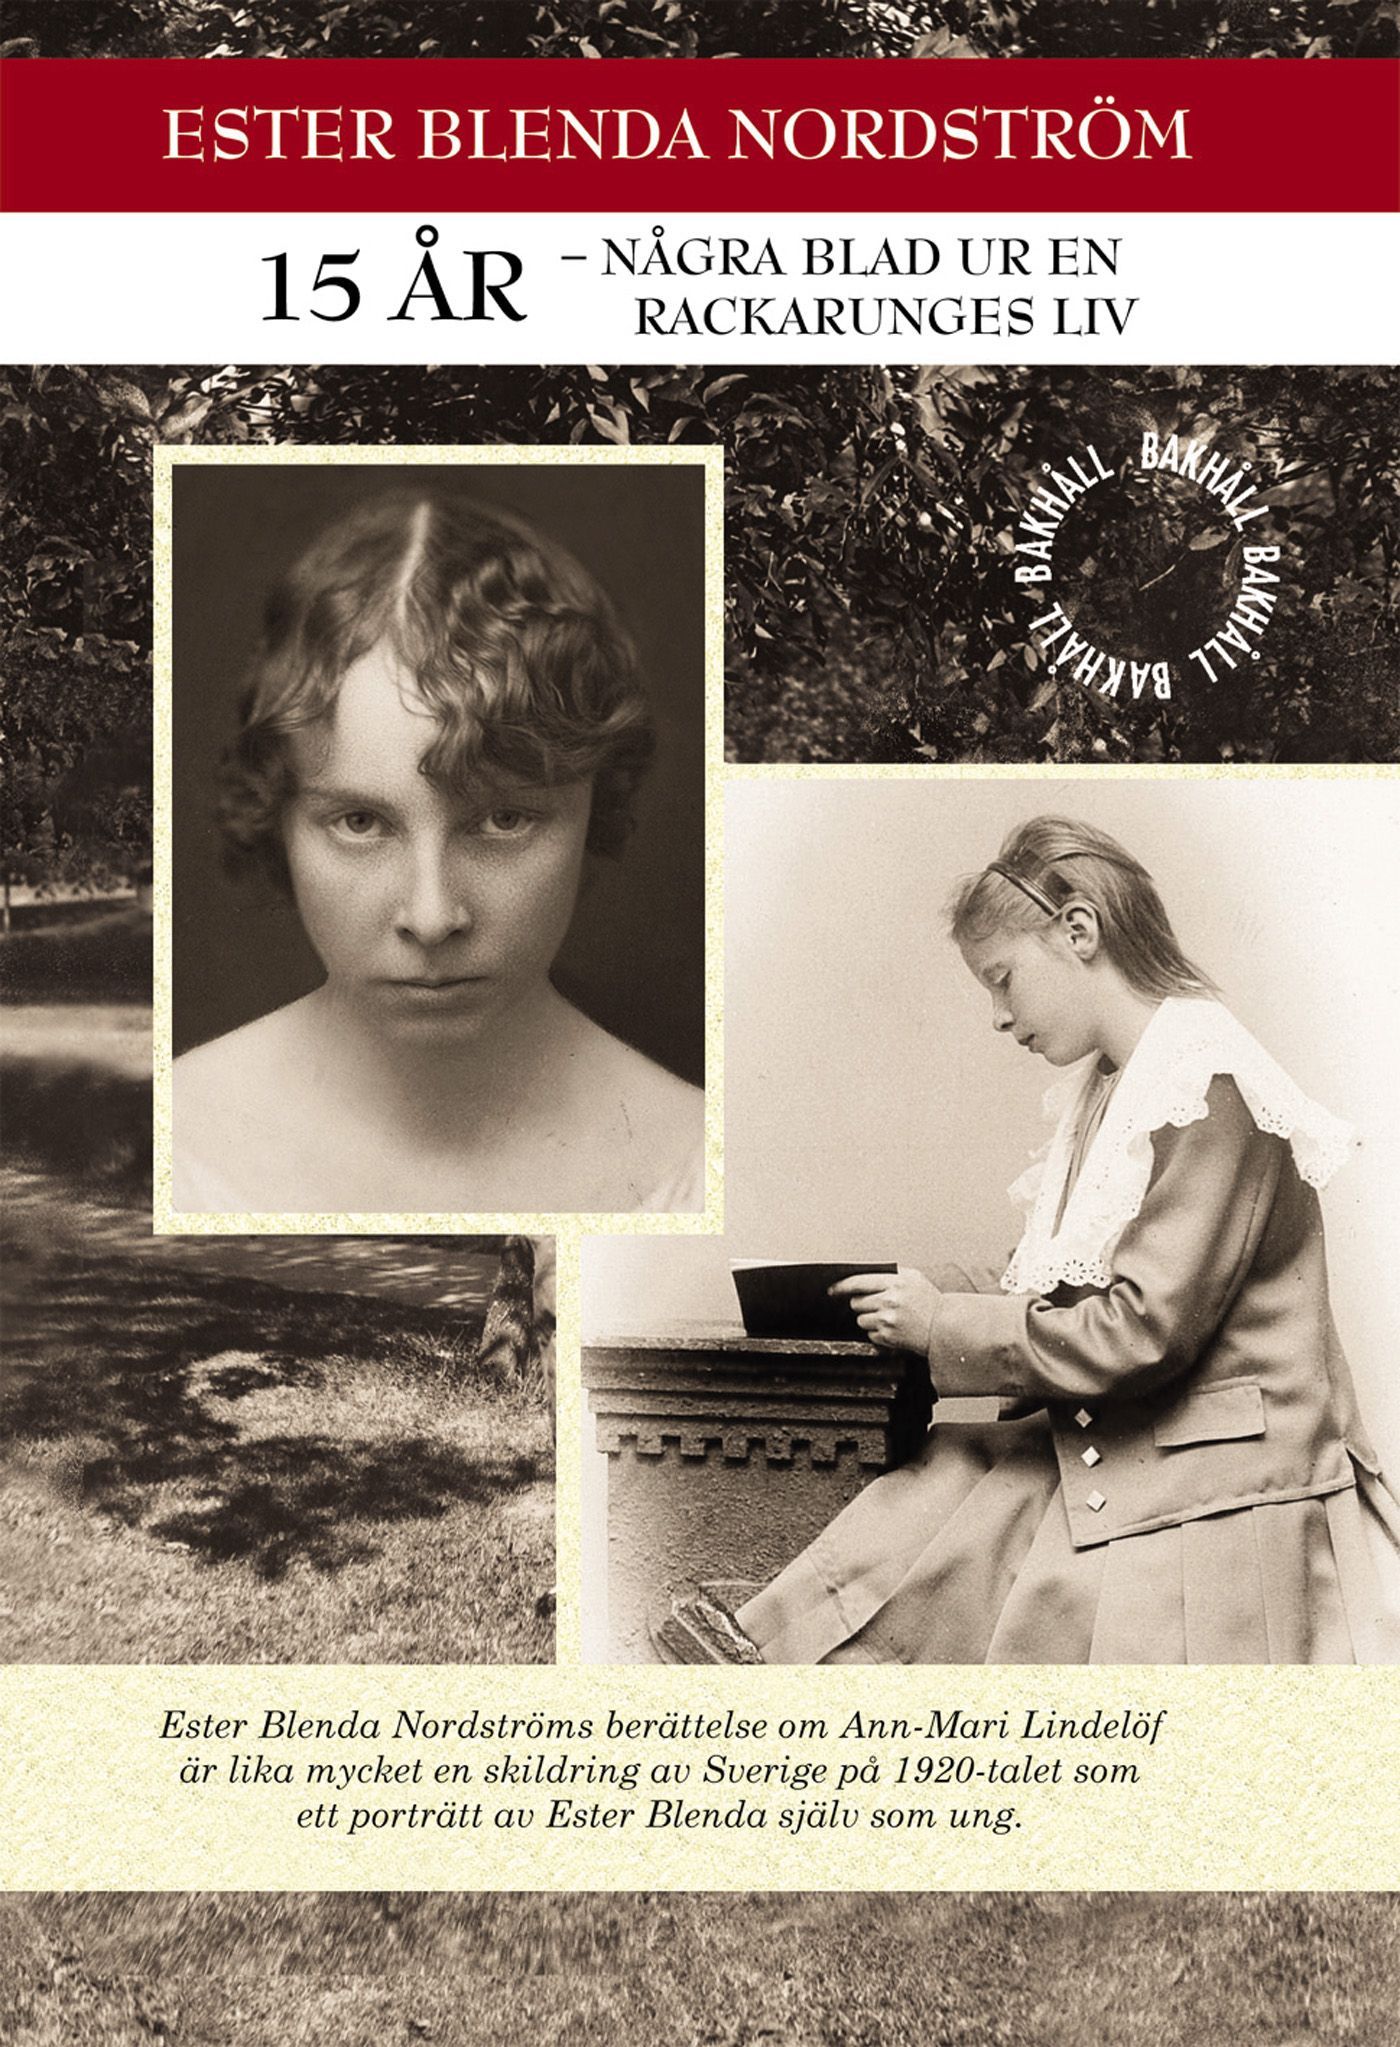 15 år - Några blad ur en rackarunges liv, e-bok av Ester Blenda Nordström